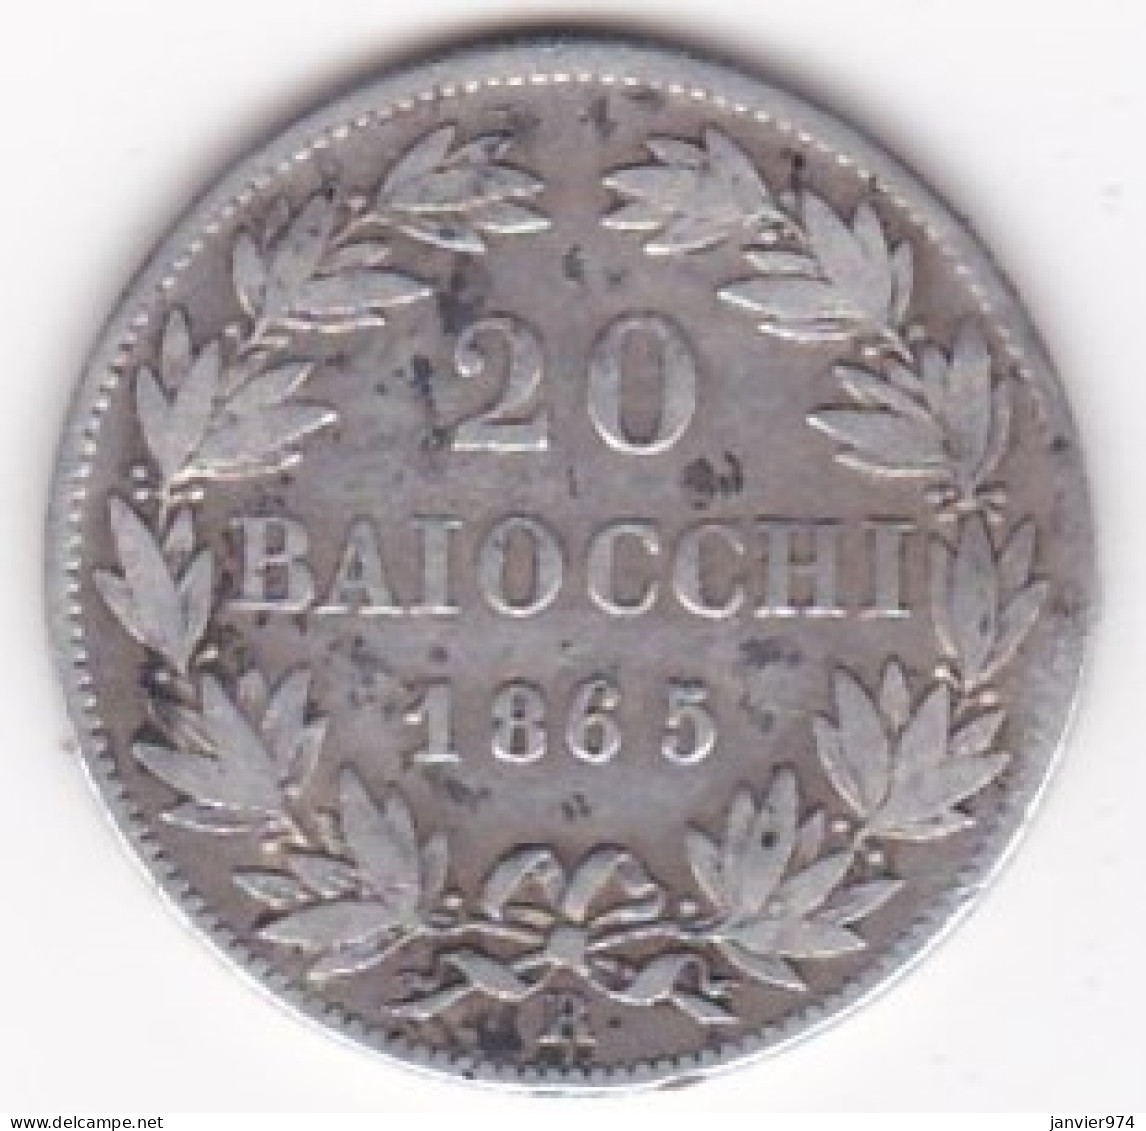 20 Baiocchi 1865 An. XX, Zecca Di Roma, Pie IX / Pio IX , Argent - Vaticano